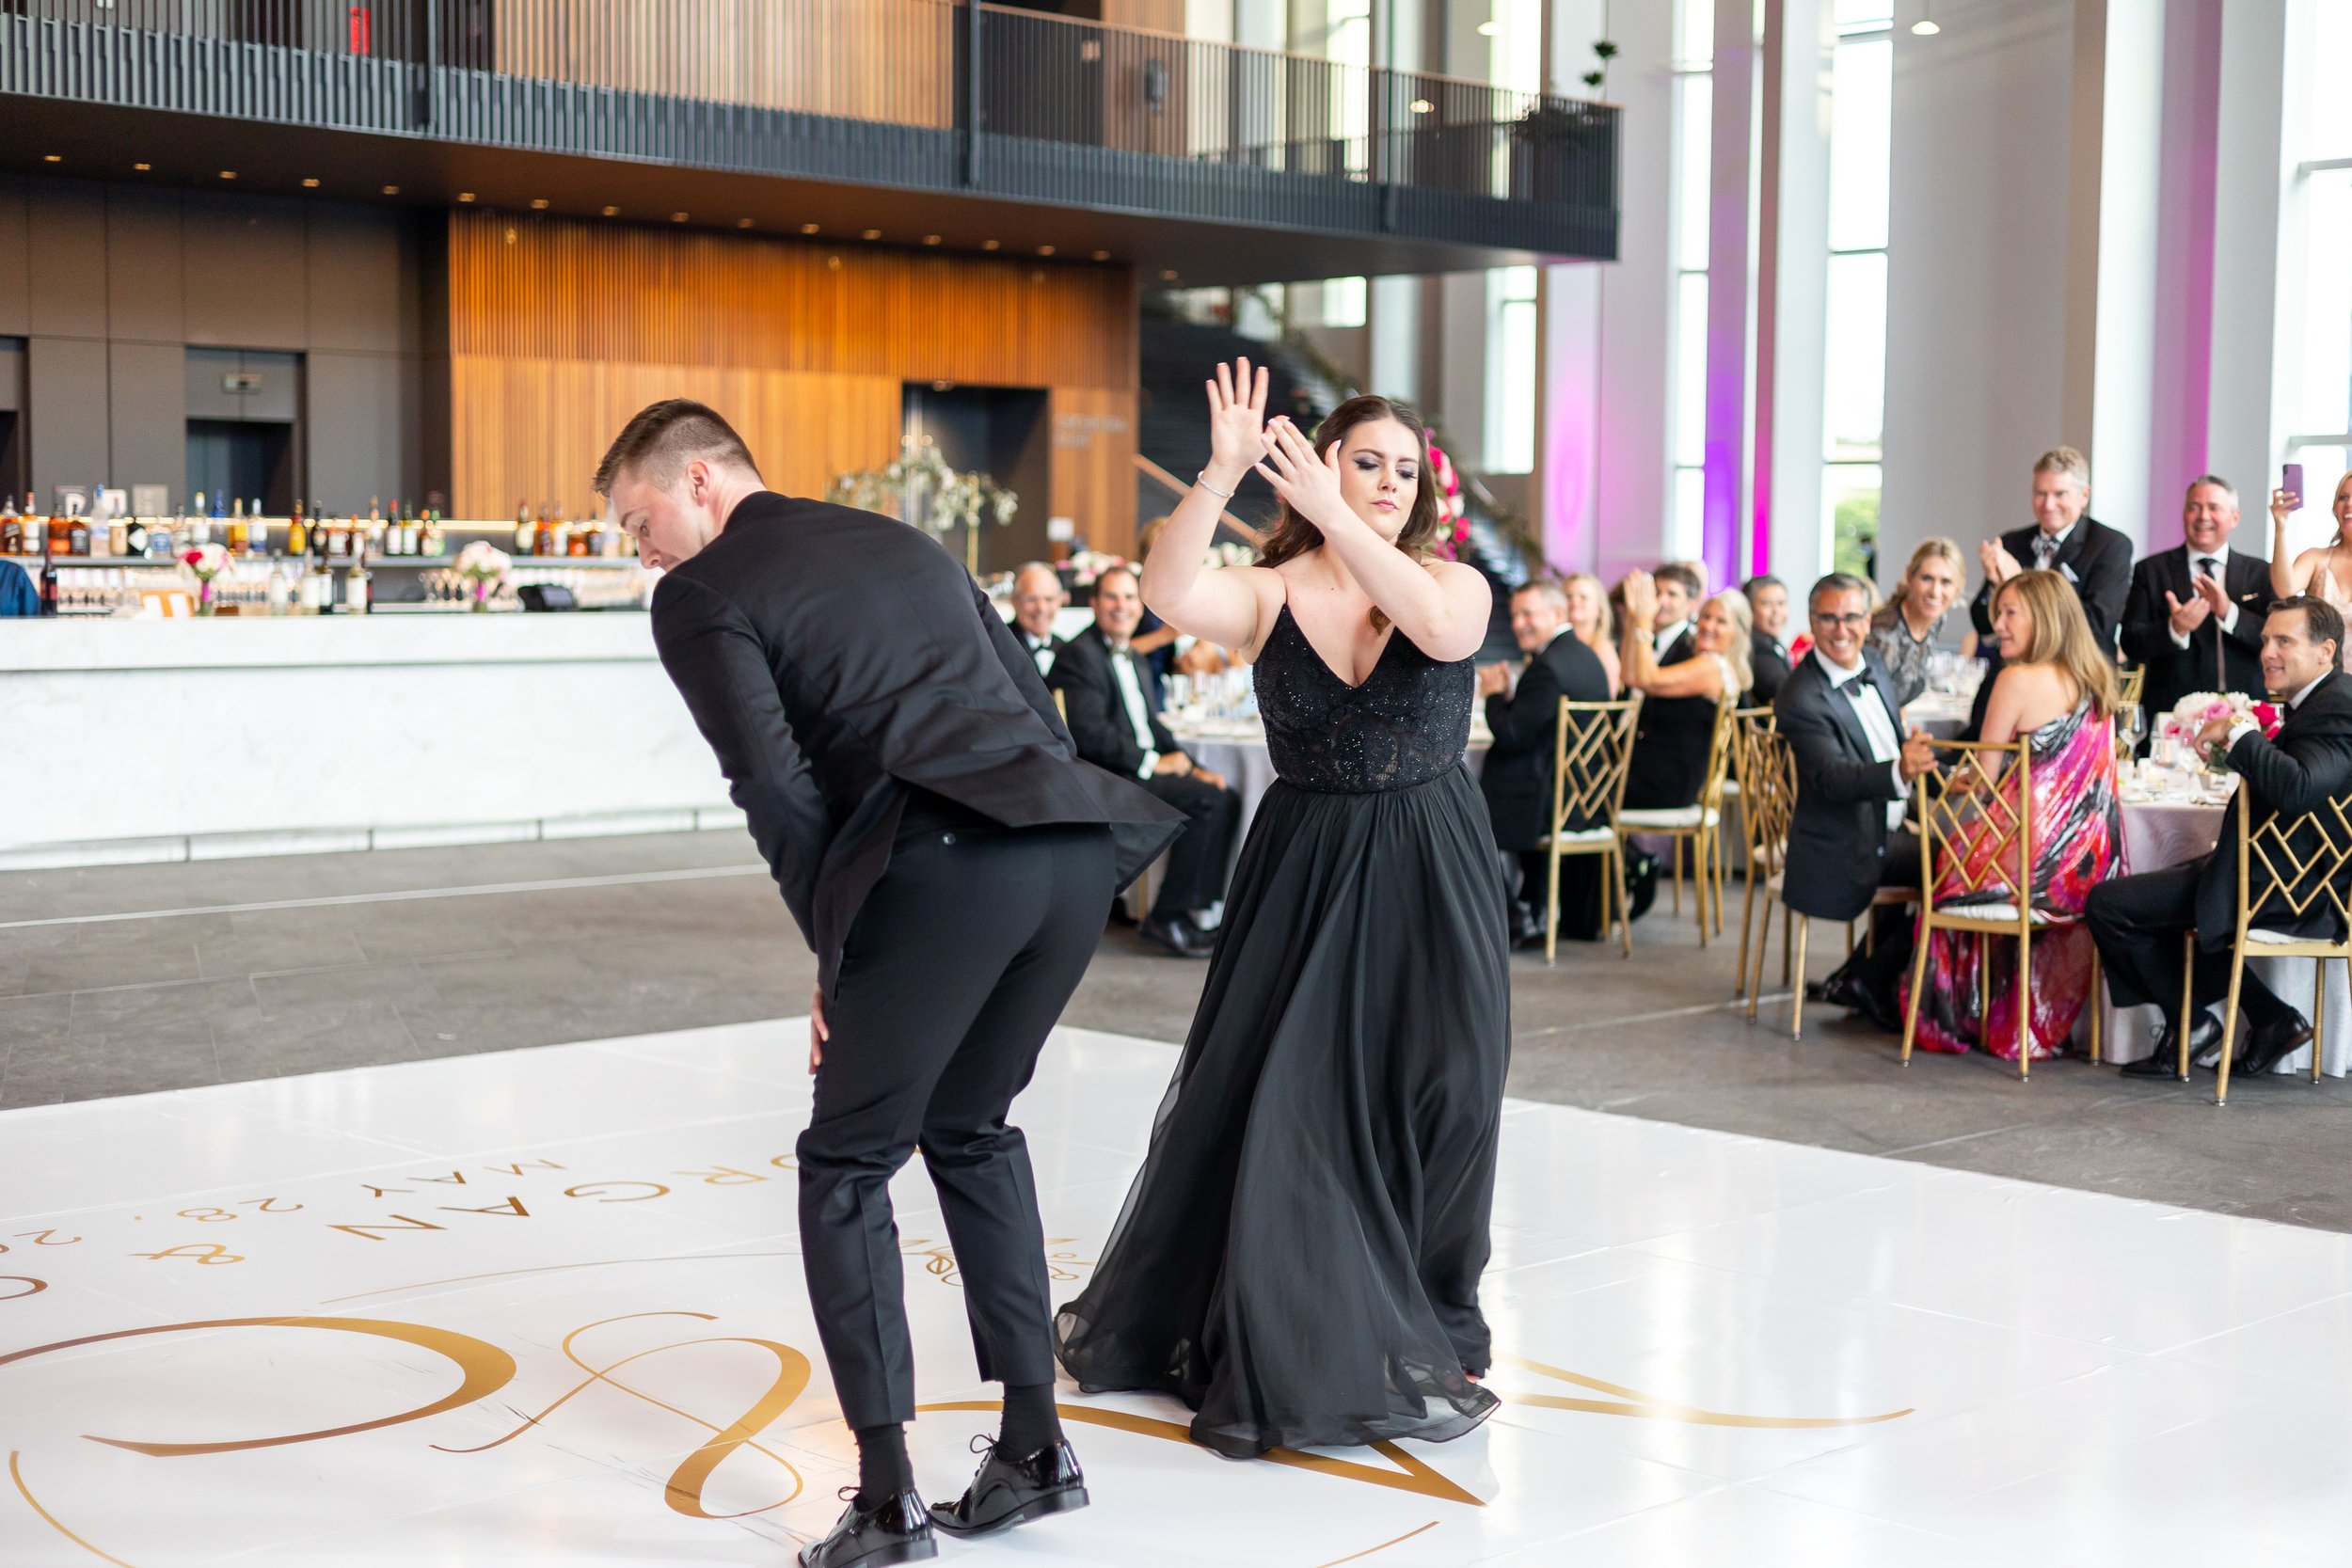 Bridesmaid and groomsmen dance on the monogrammed dance floor during wedding reception